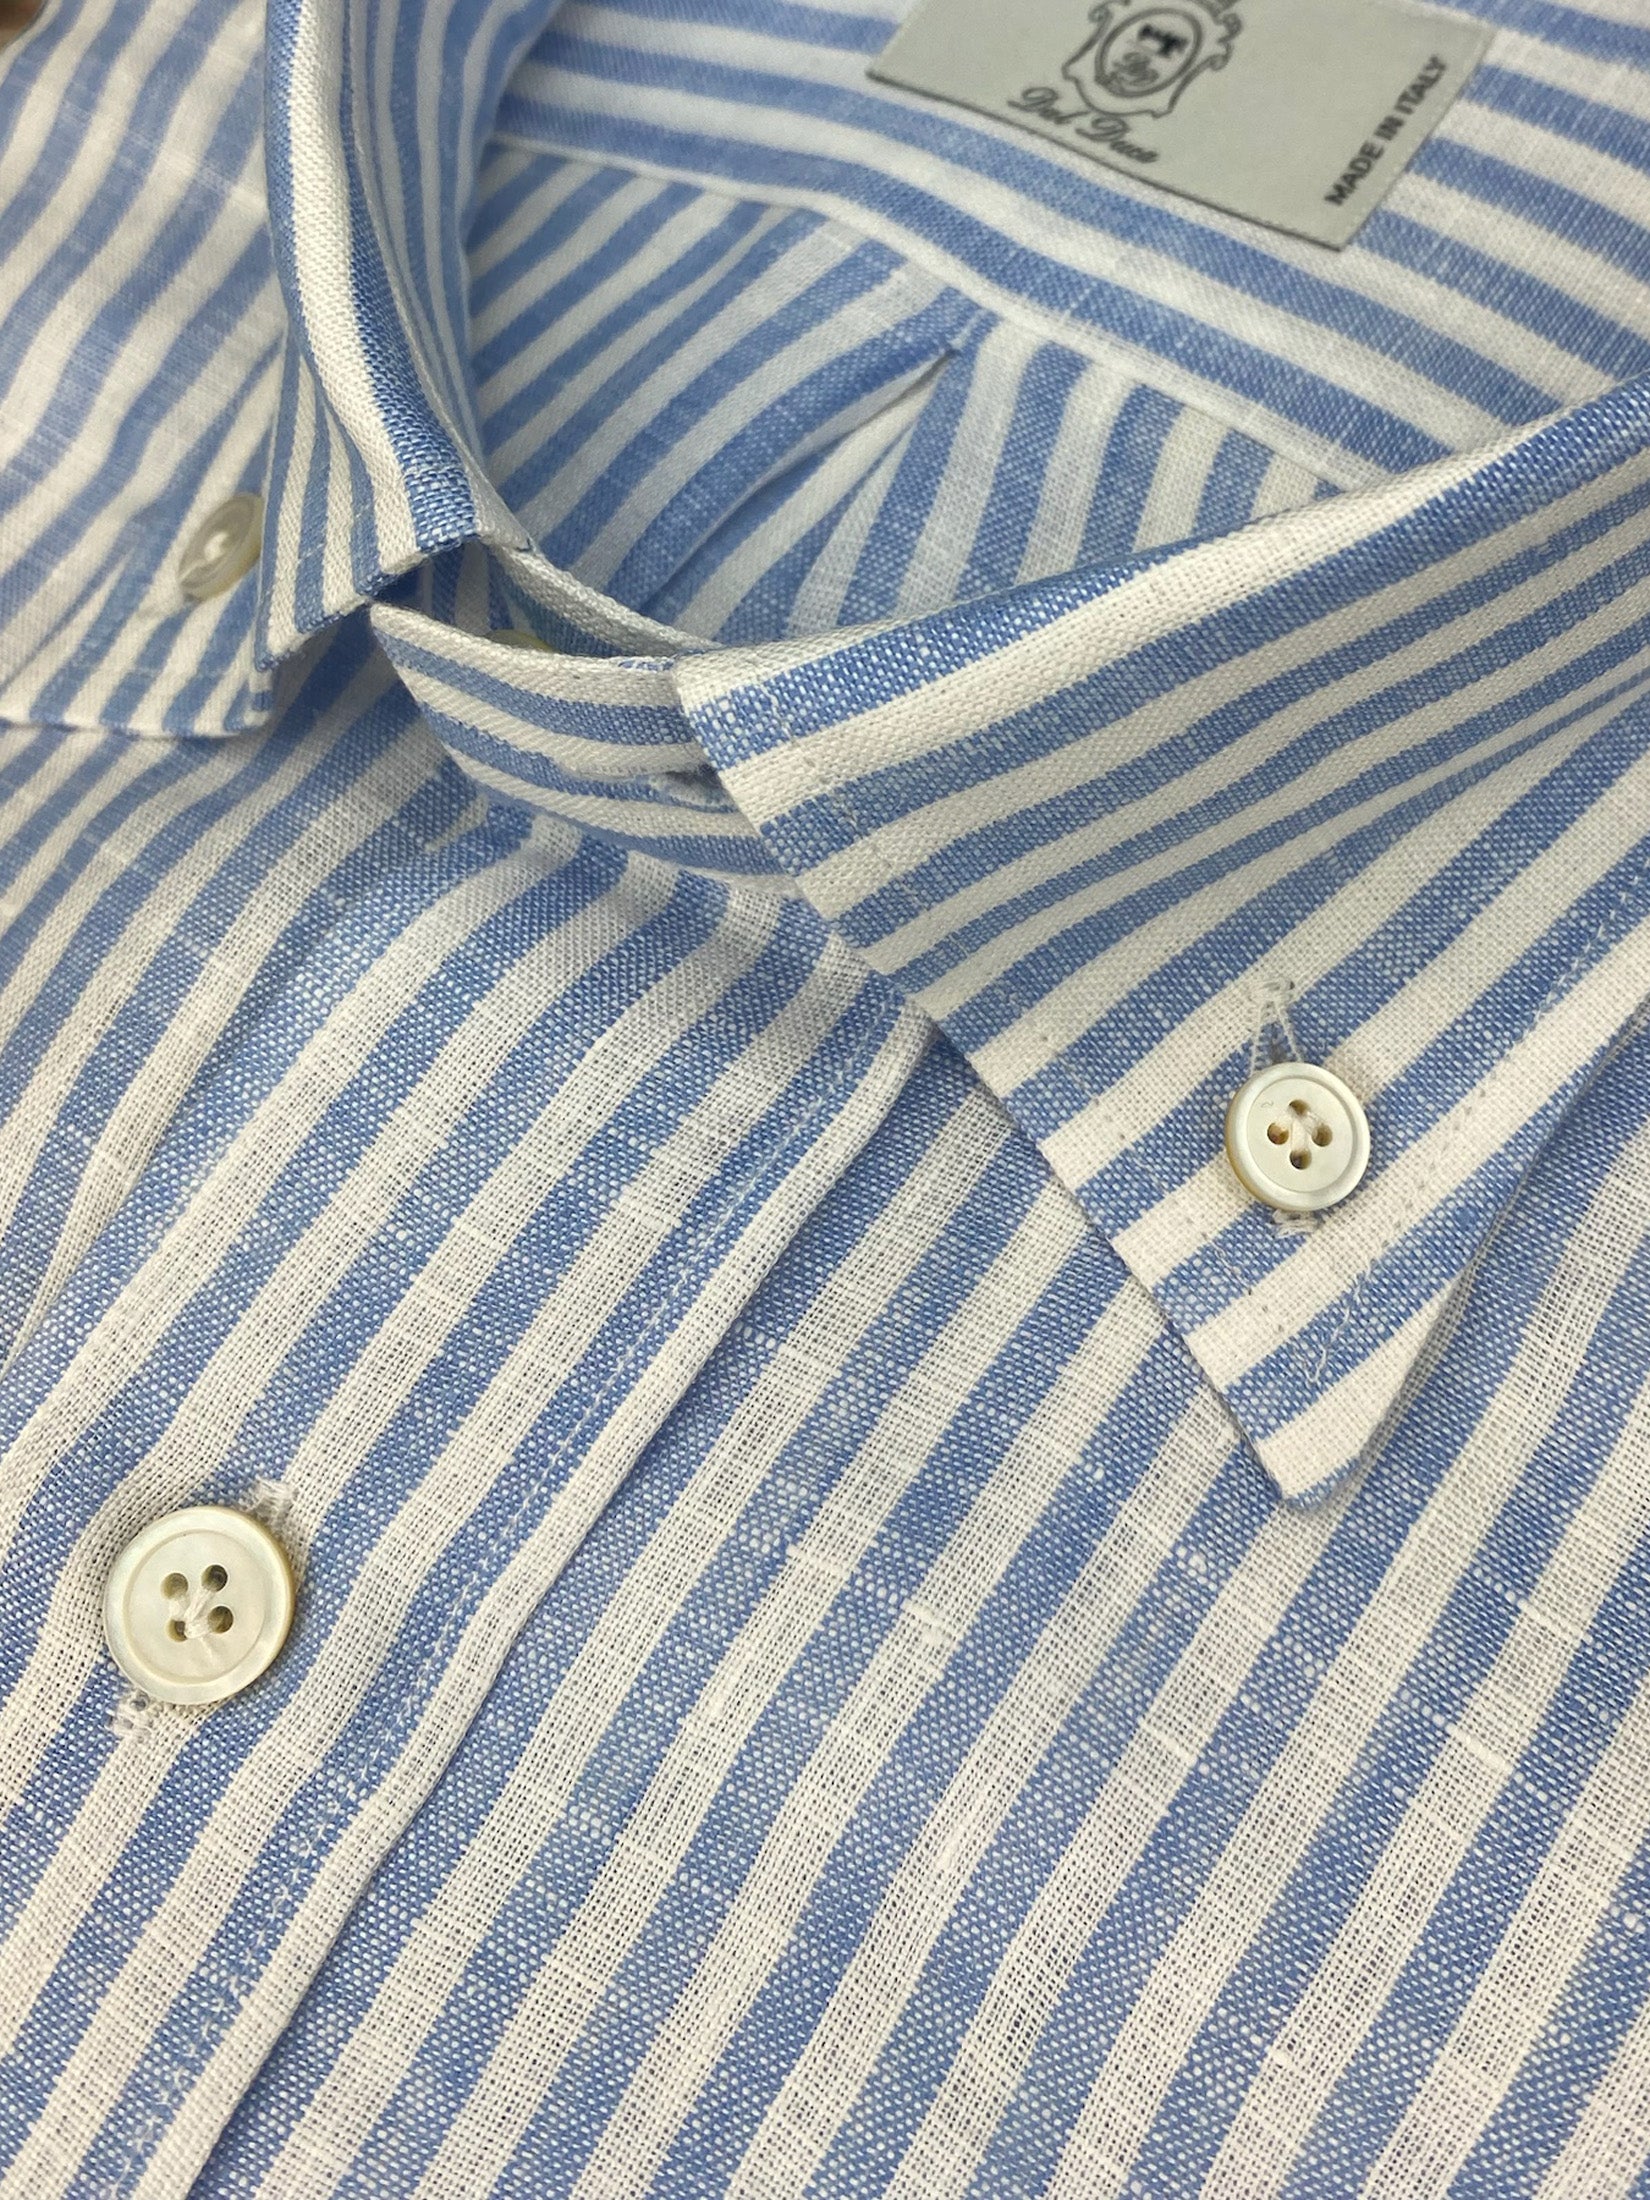 Stripped White and Light Blue Linen Shirt